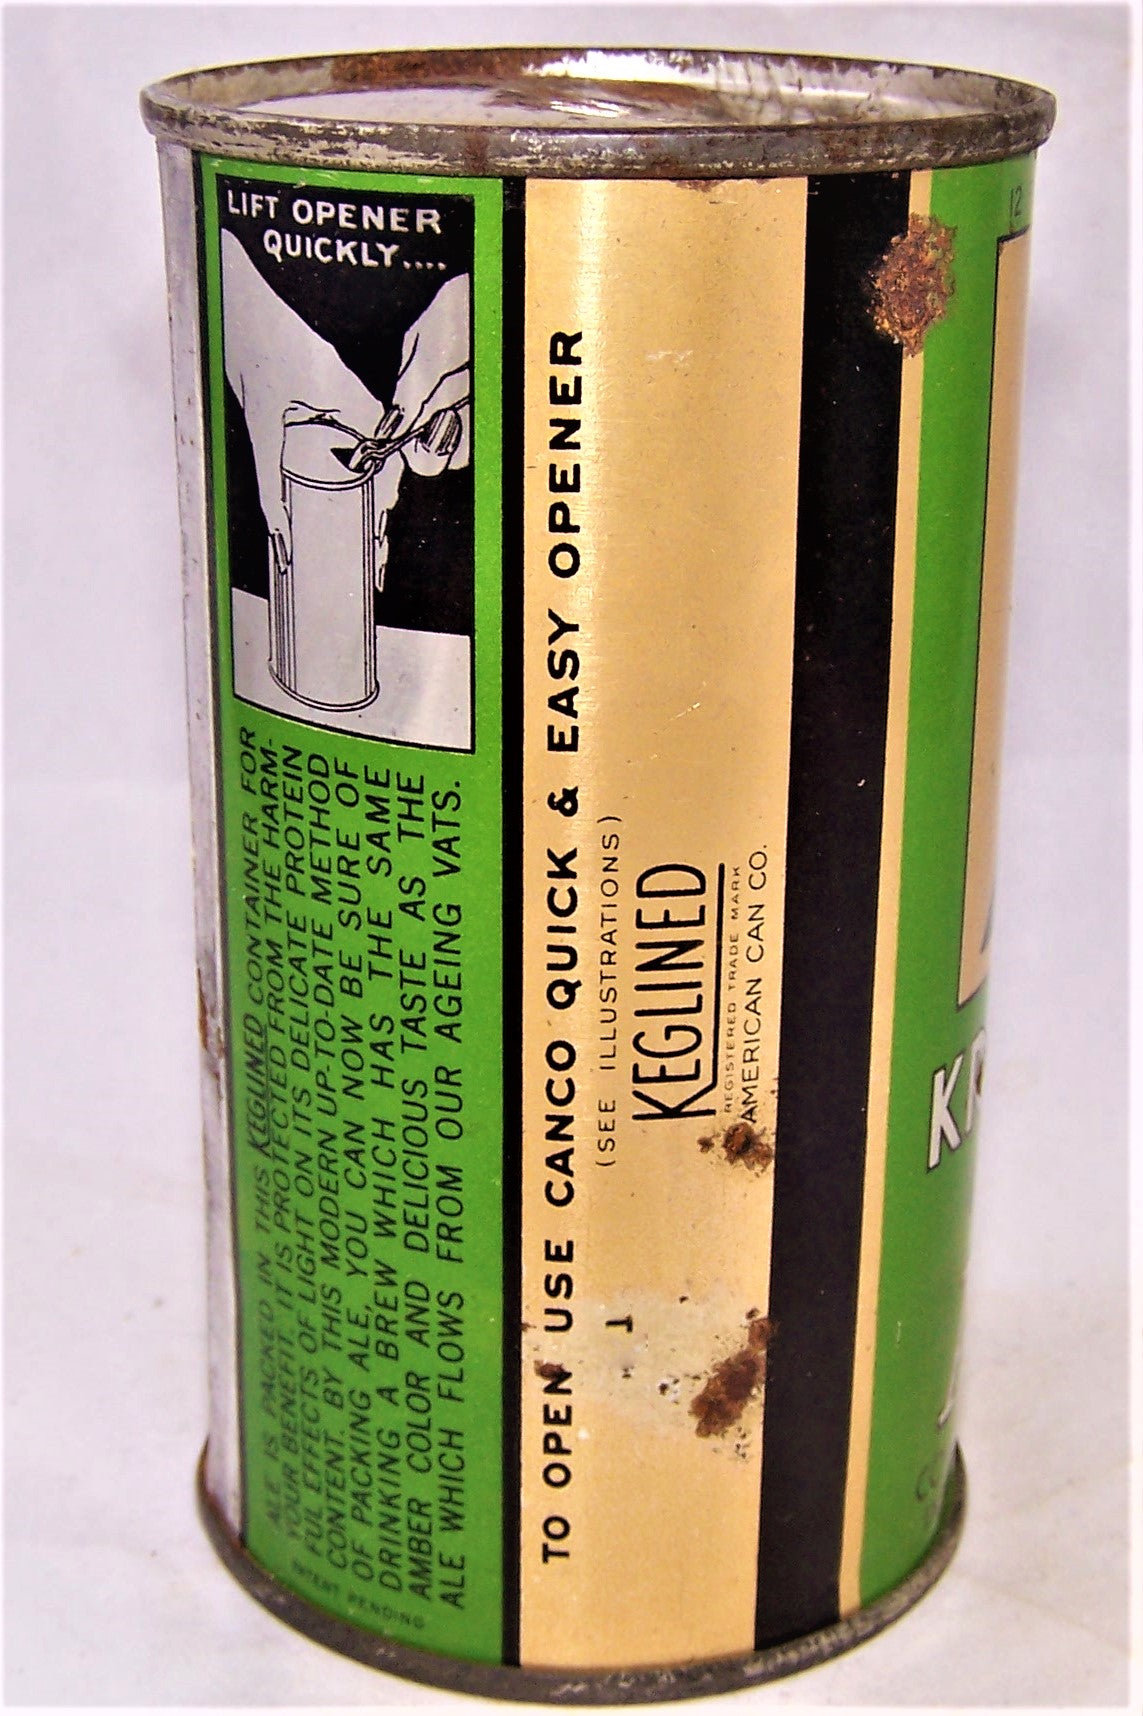 Krueger's Cream Ale (Baldy) Lilek # 459, and USBC 89-25, SOLD ON  03/31/19